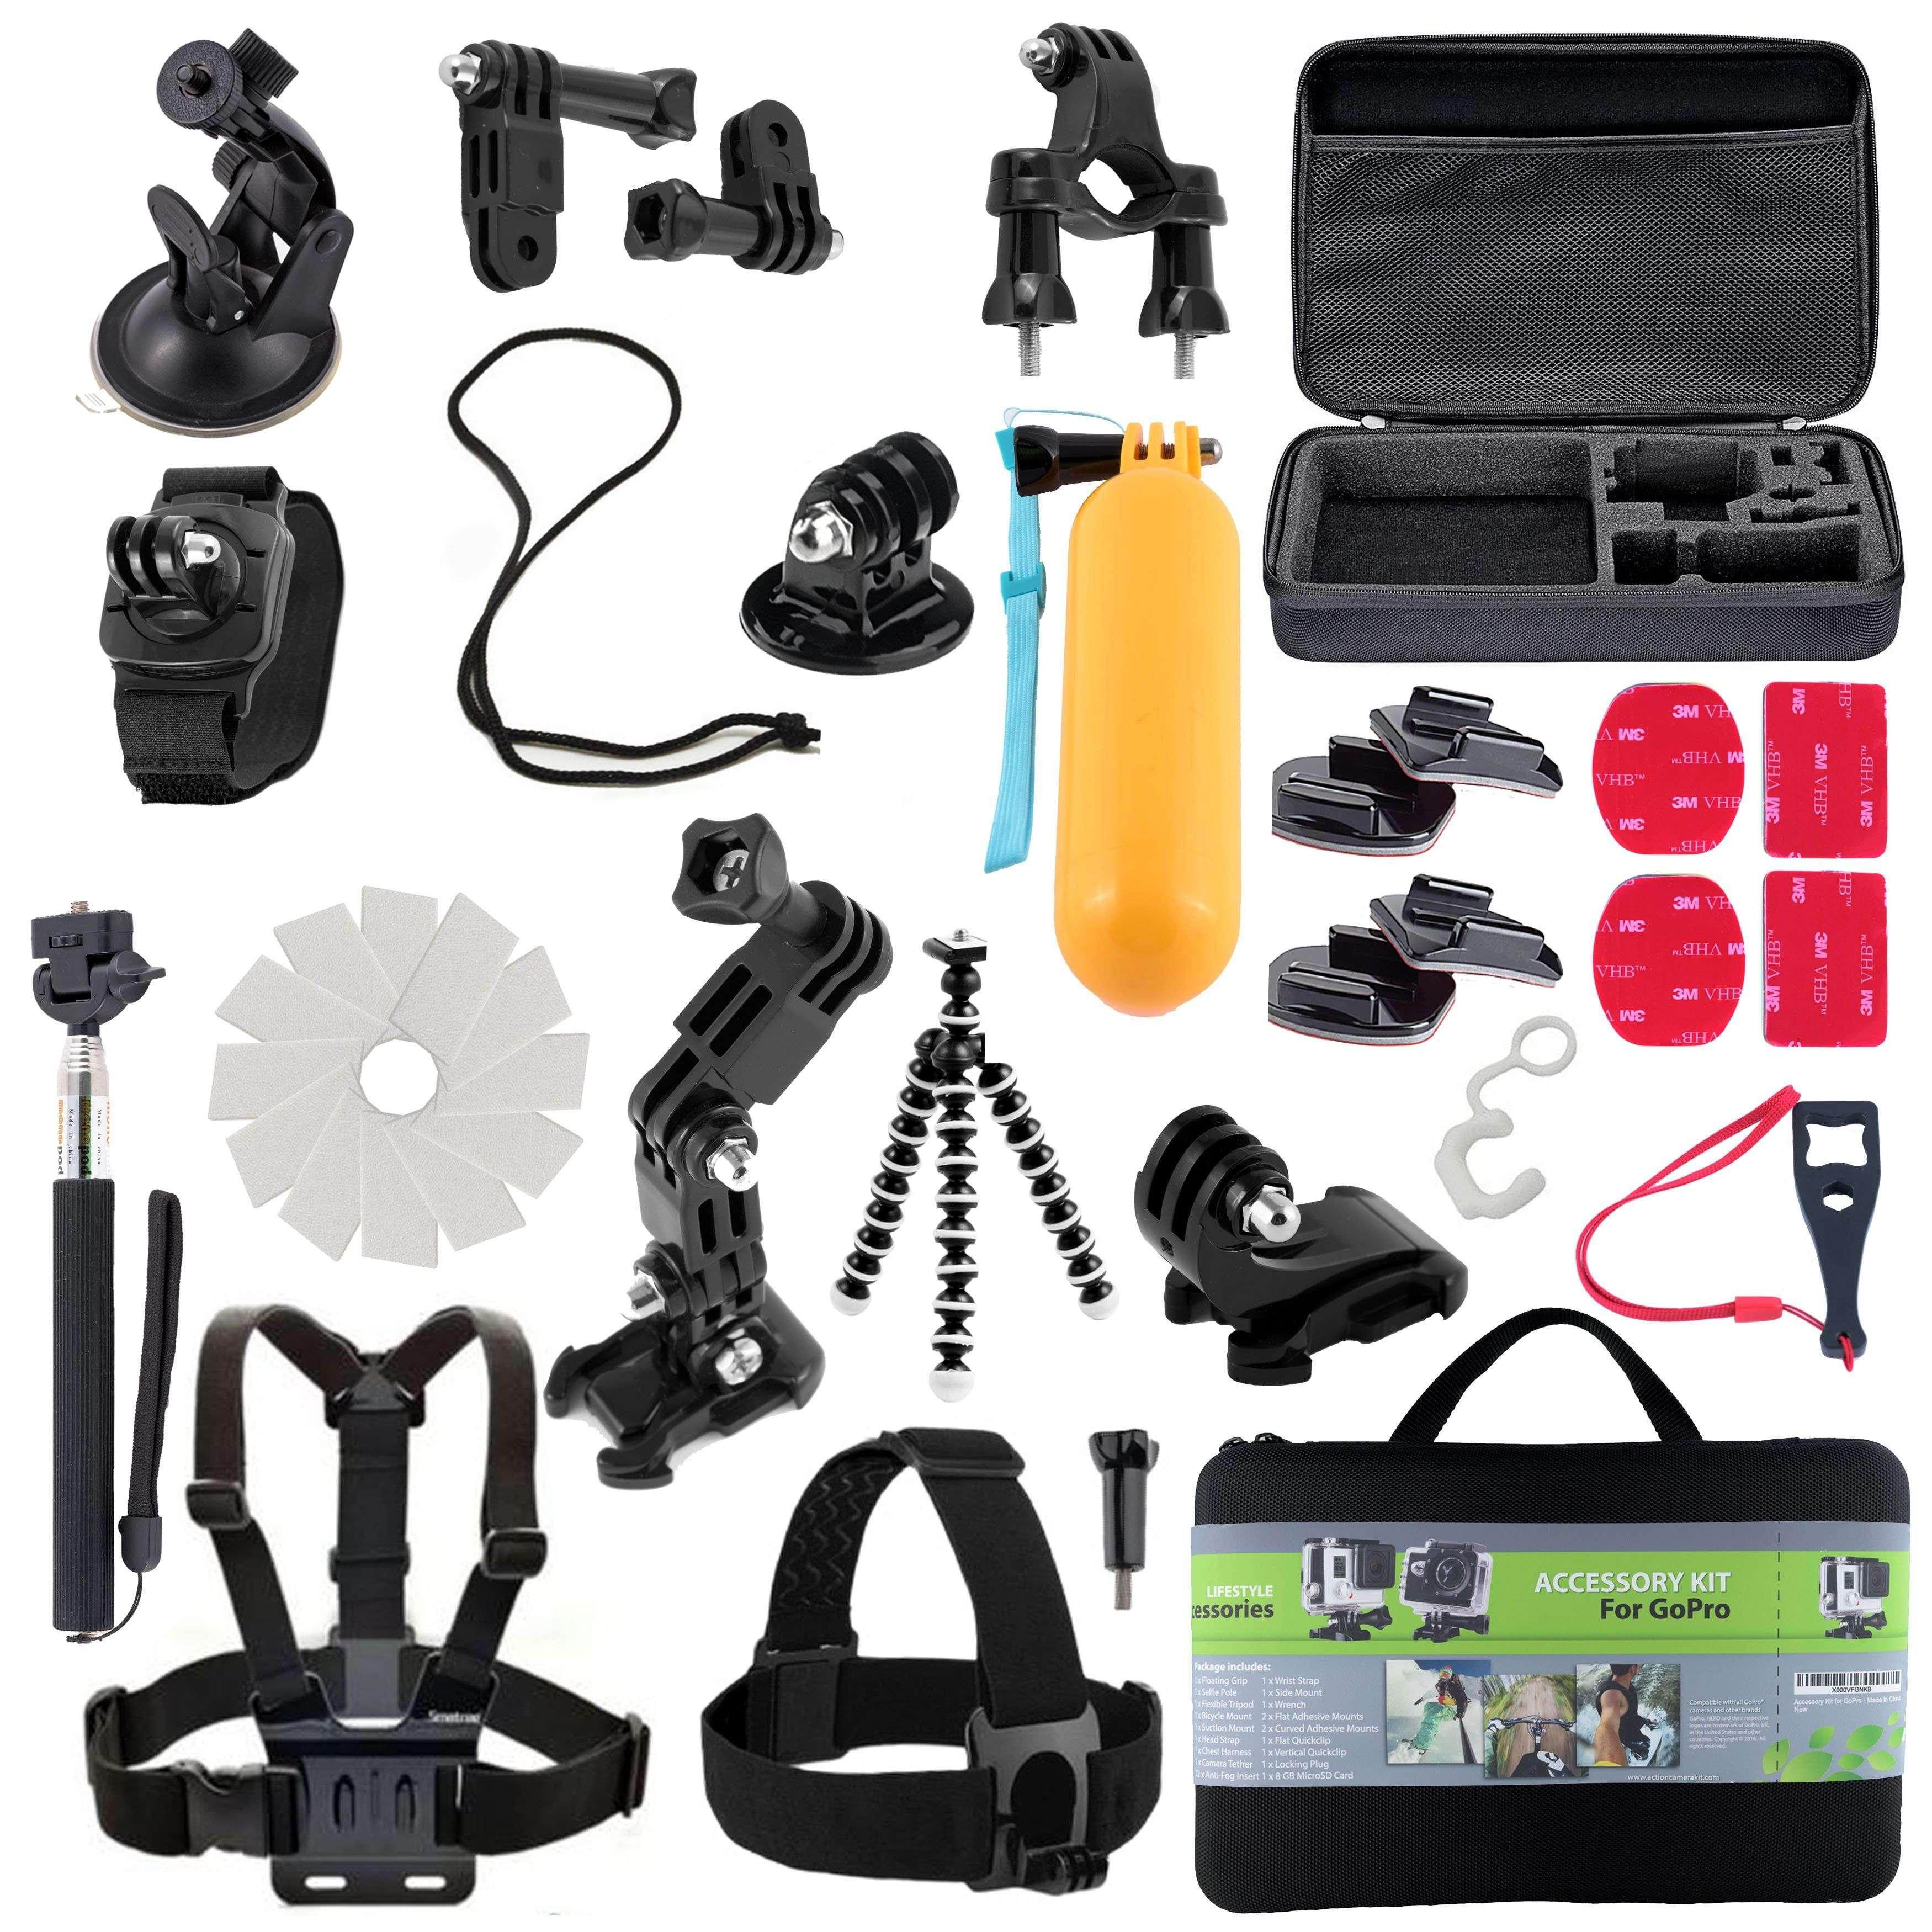 Milawholesale.com Action camera Lifestyle – accessories Wholesale, Accessories Camera Piece Mila wholesale, Action Kit 31